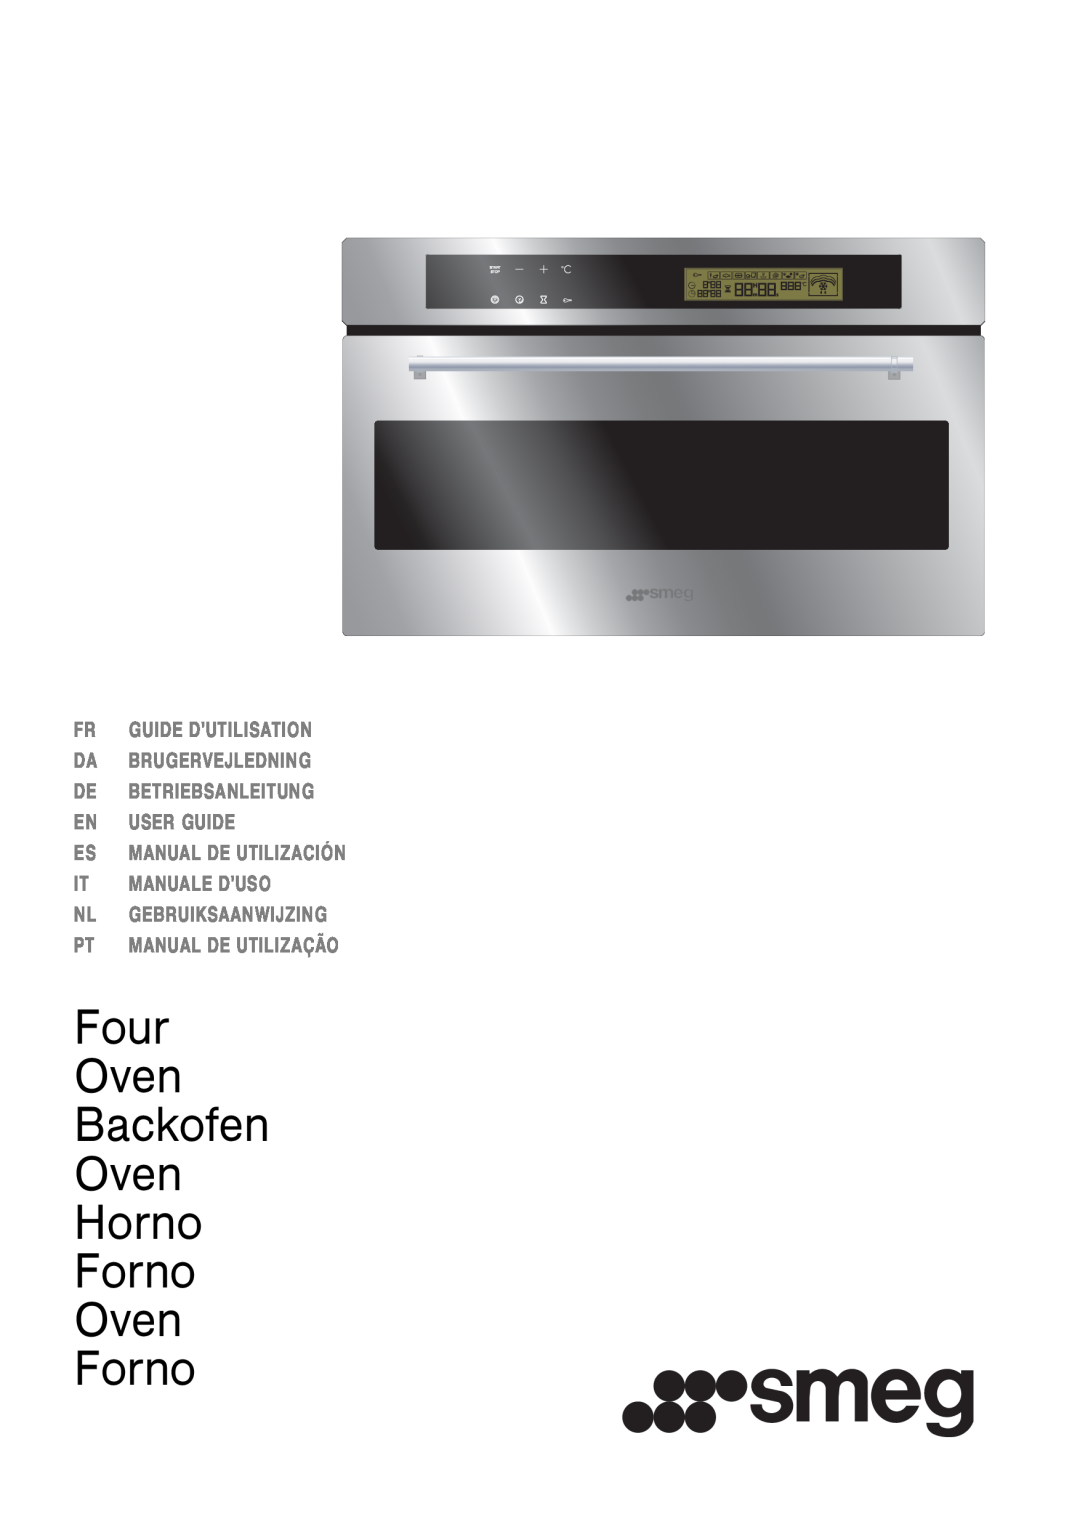 Smeg manual Four Oven Backofen Oven Horno Forno Oven Forno, User Guide, Manuale Duso 